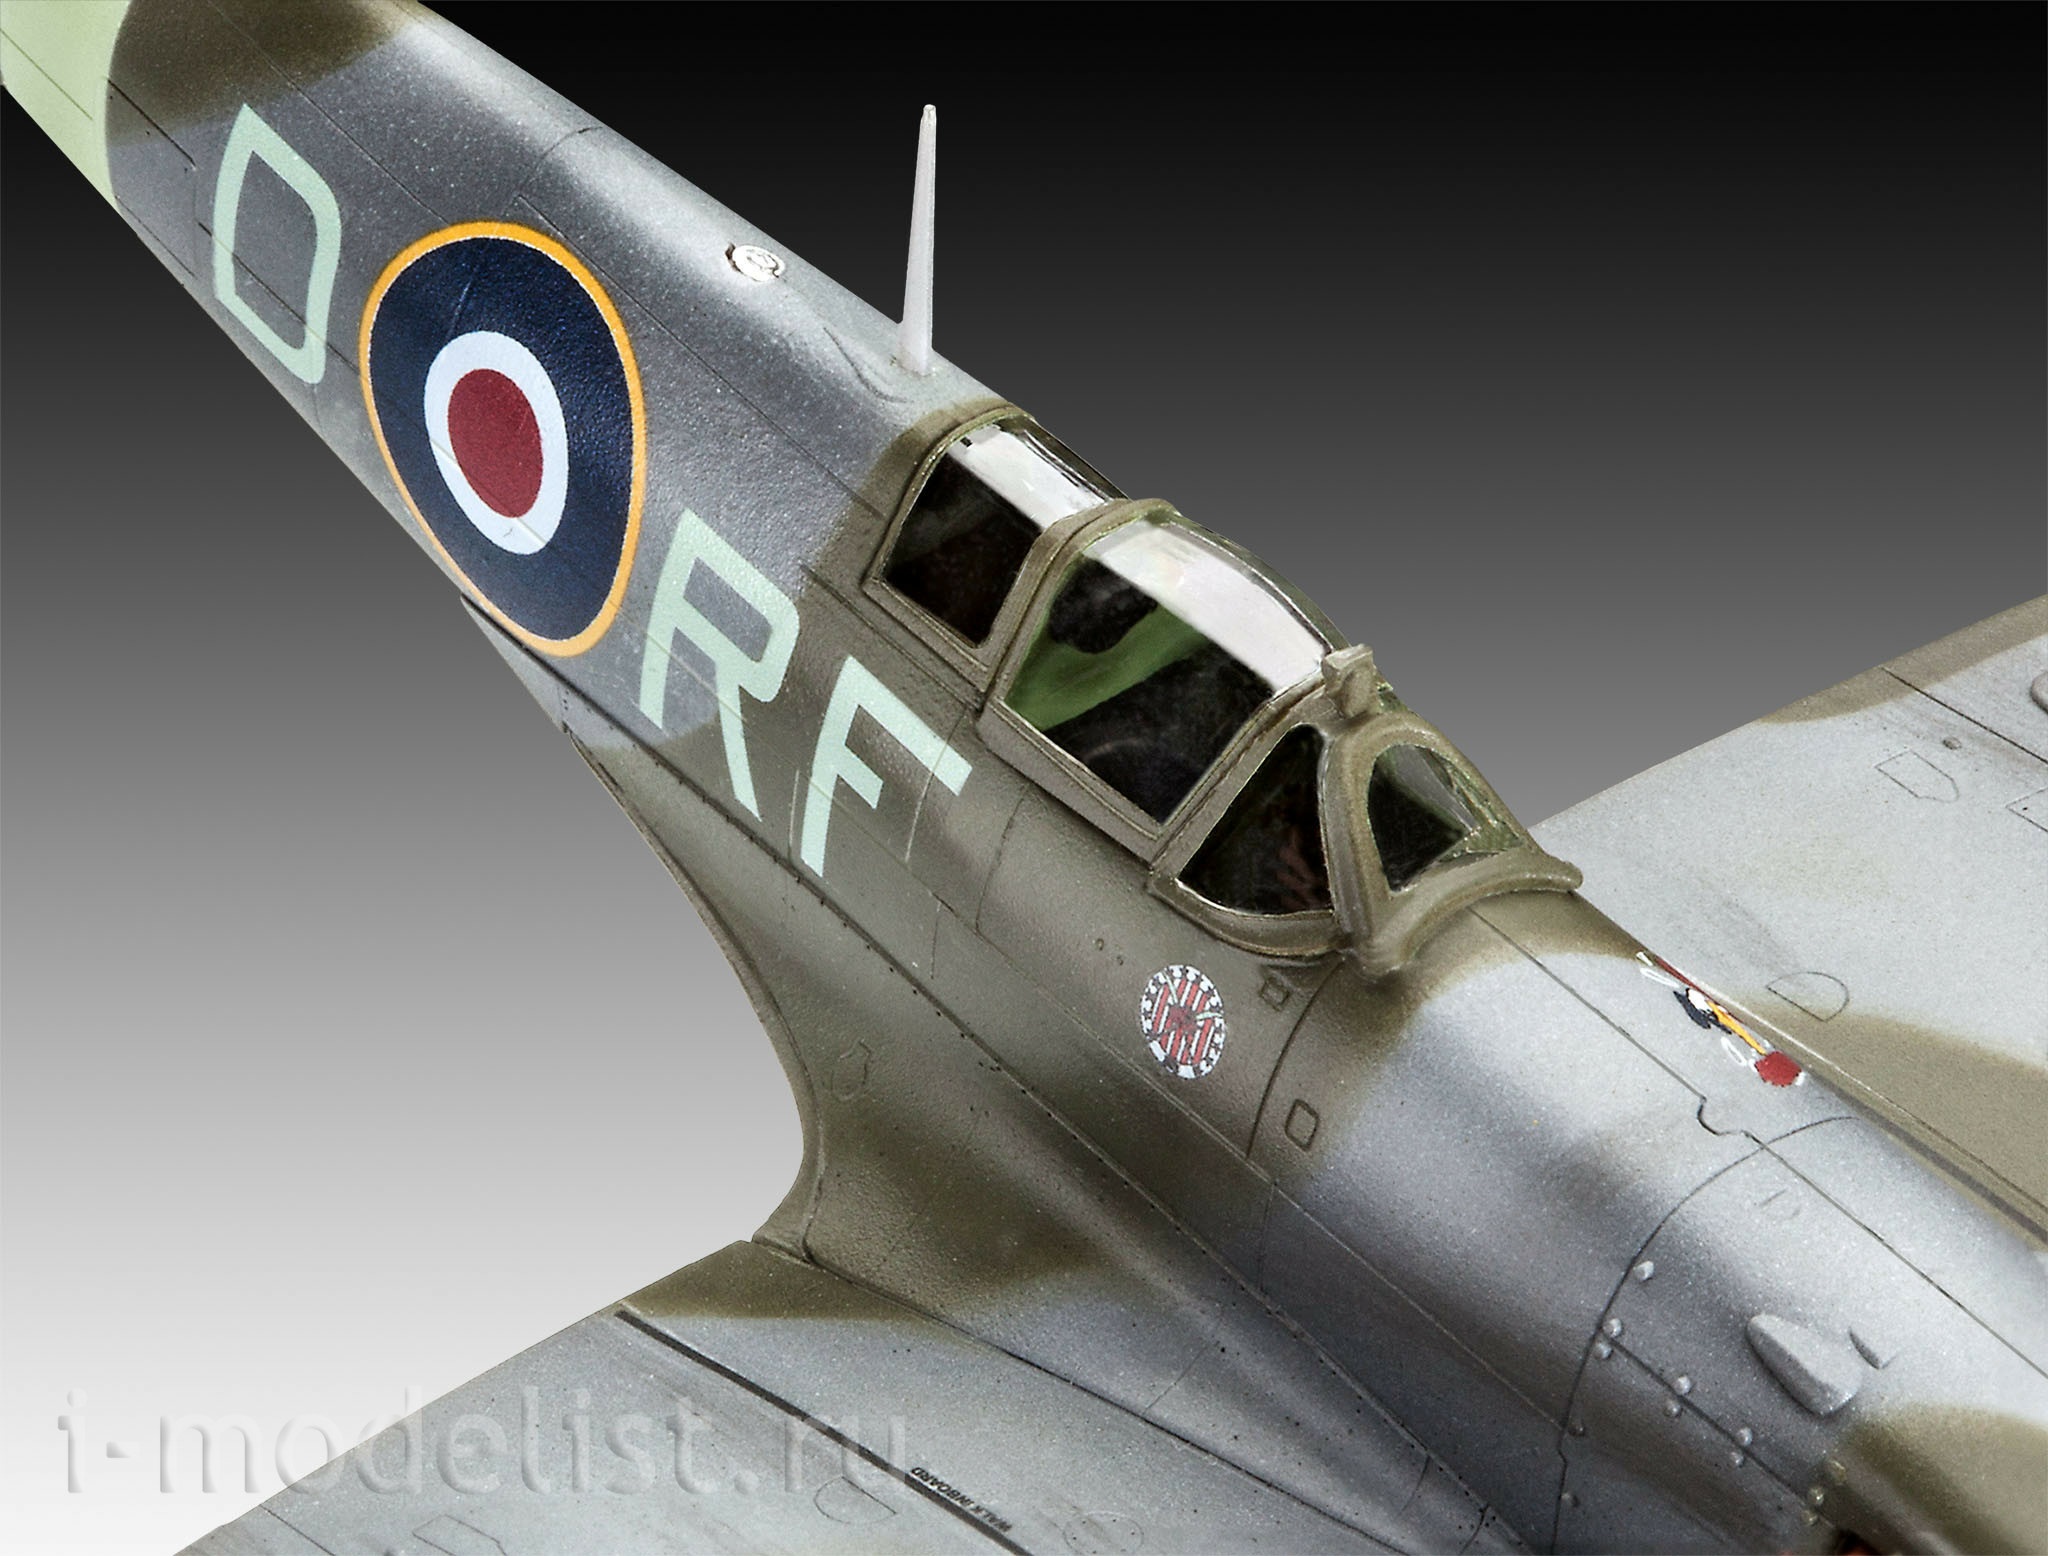 03897 Revell 1/72 British fighter Spitfire Mk. Vb during the Second world war